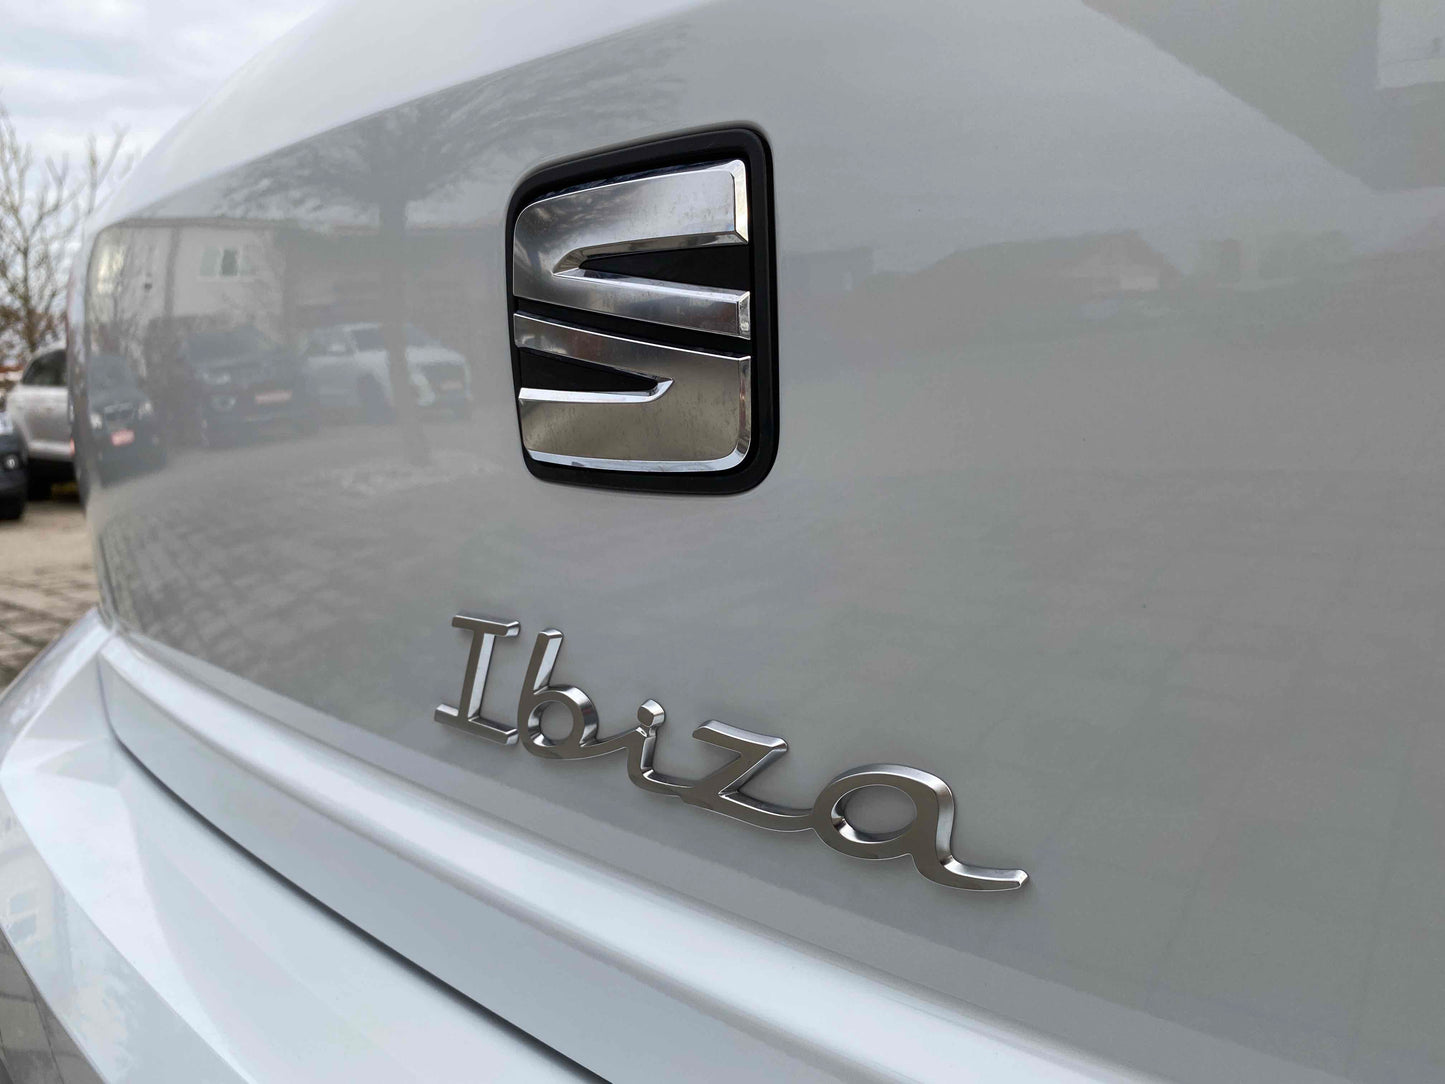 New car Seat Ibiza FR Pro Black Edition 1.0 TSI 110 LED|NAV|XL|WINTER|5YGARANTIE| (stock) SWH 149 Net price